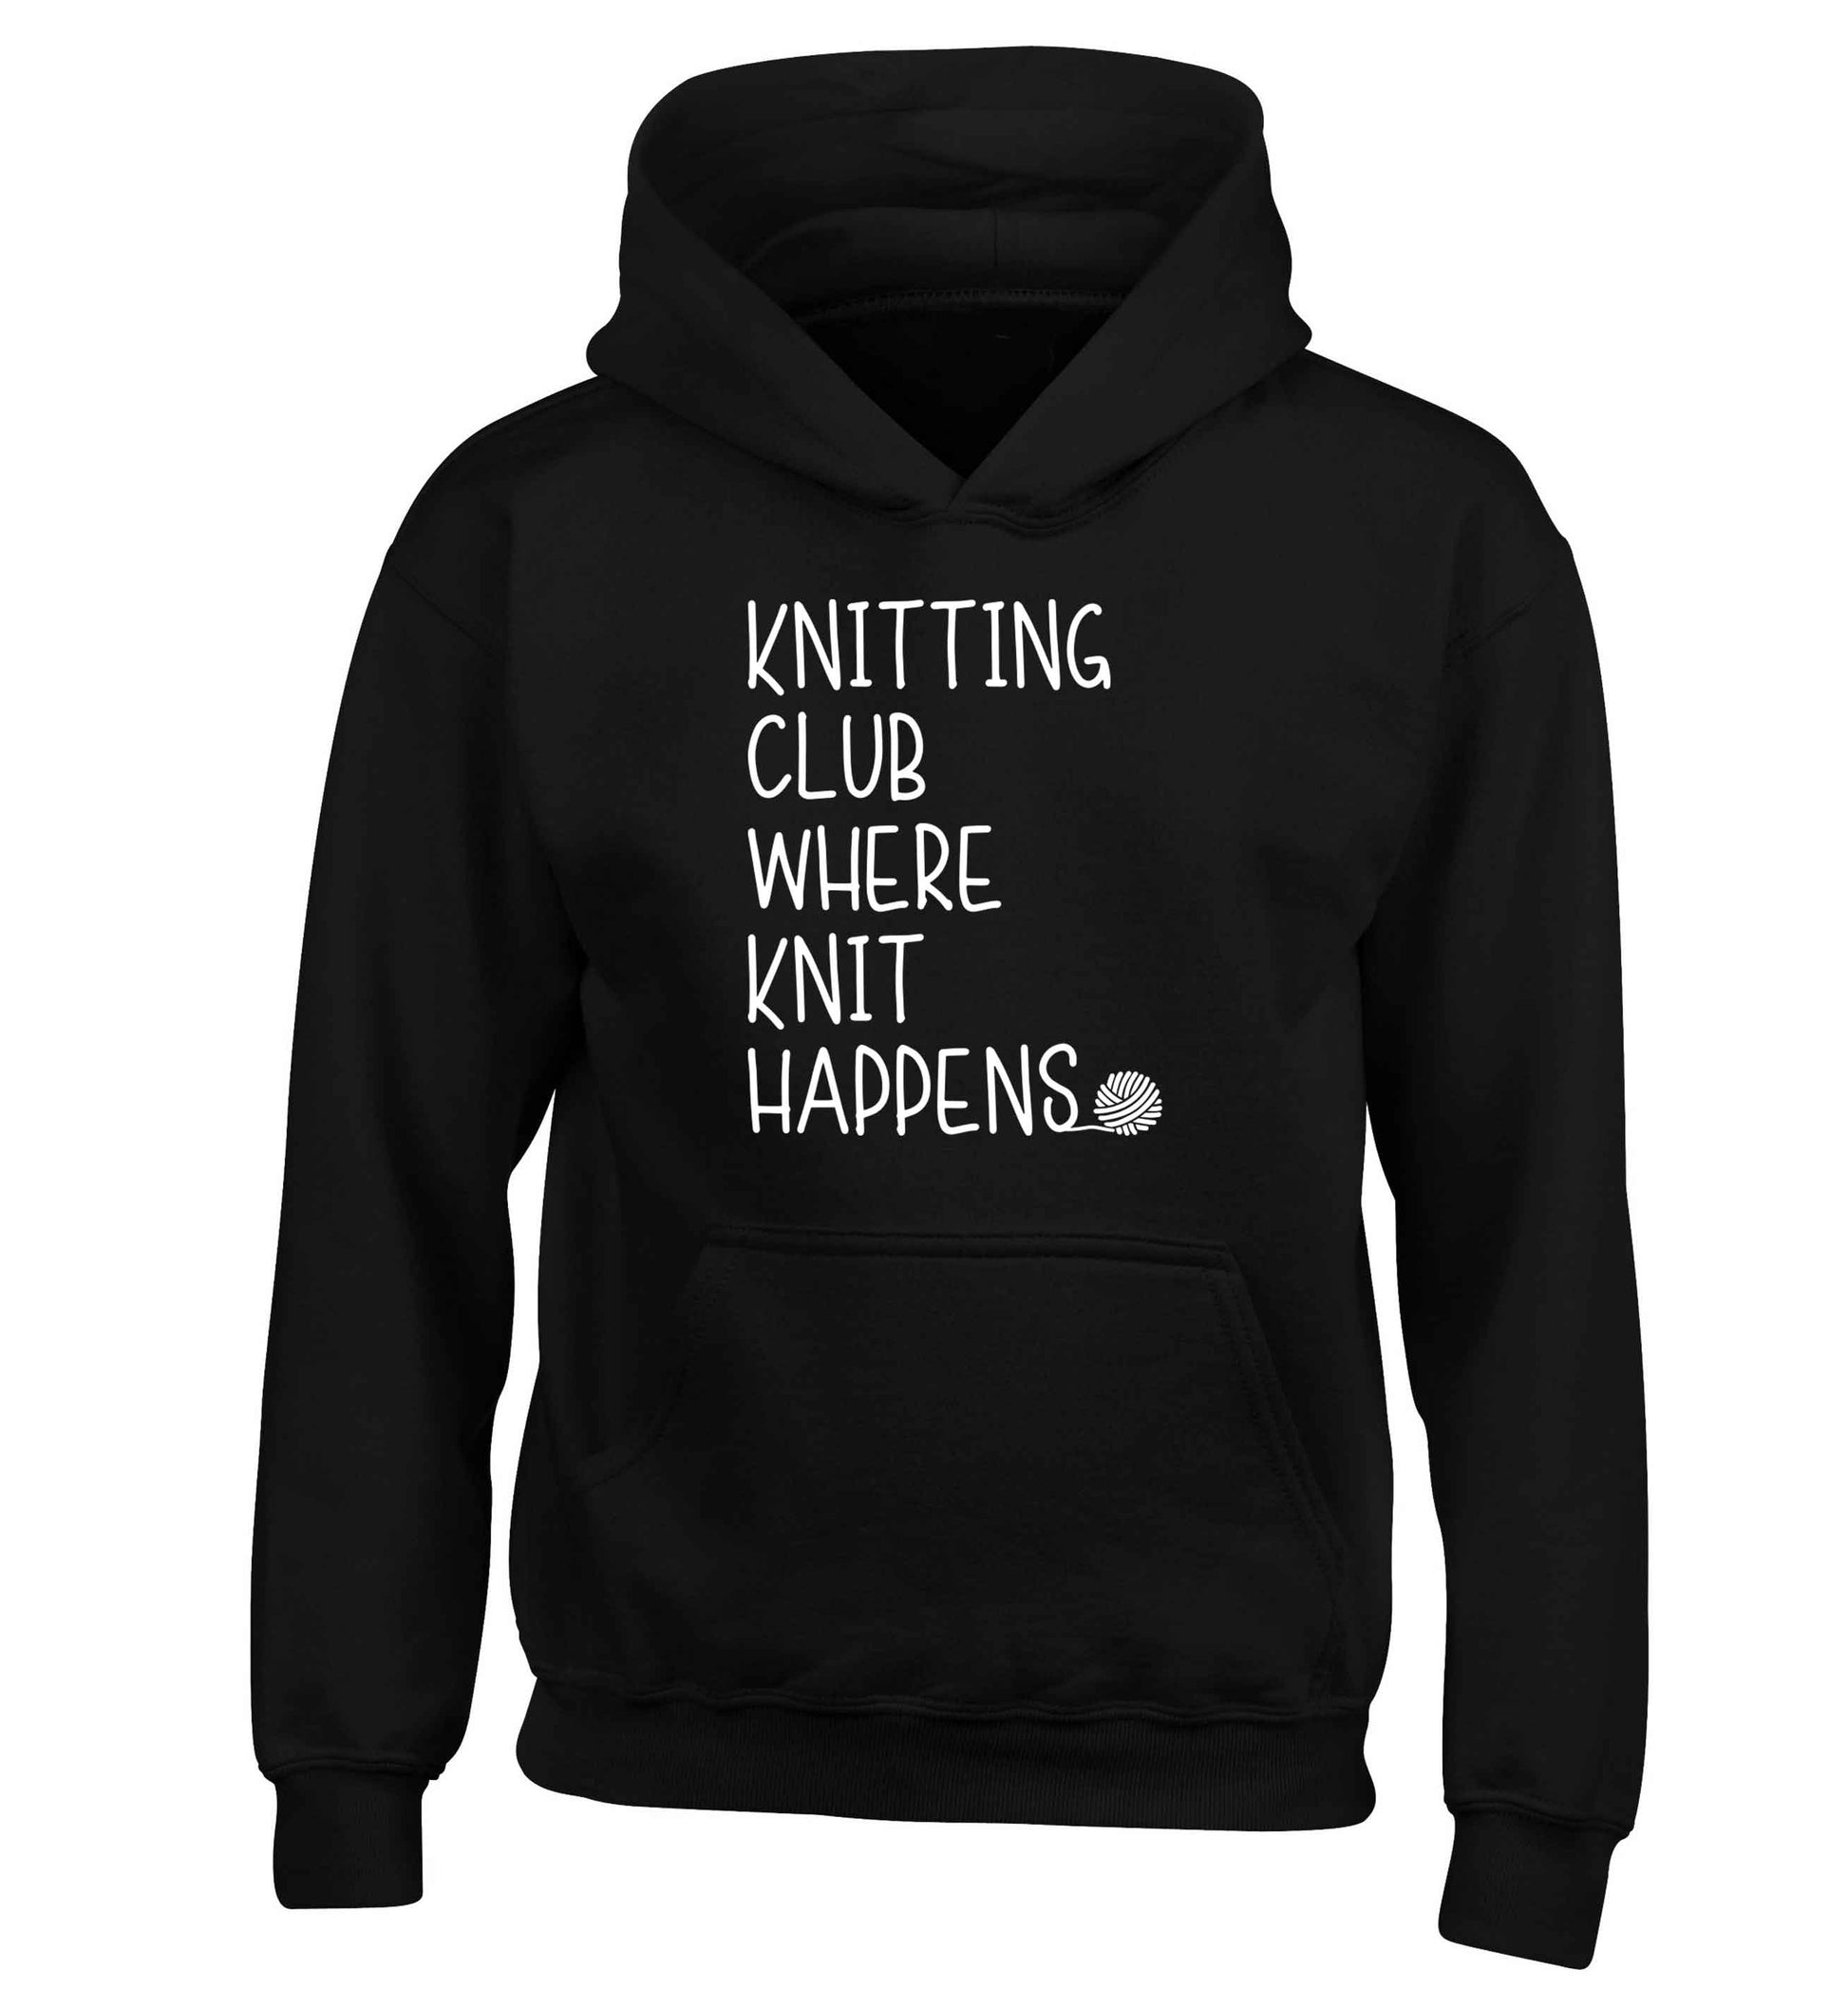 Knitting club where knit happens children's black hoodie 12-13 Years